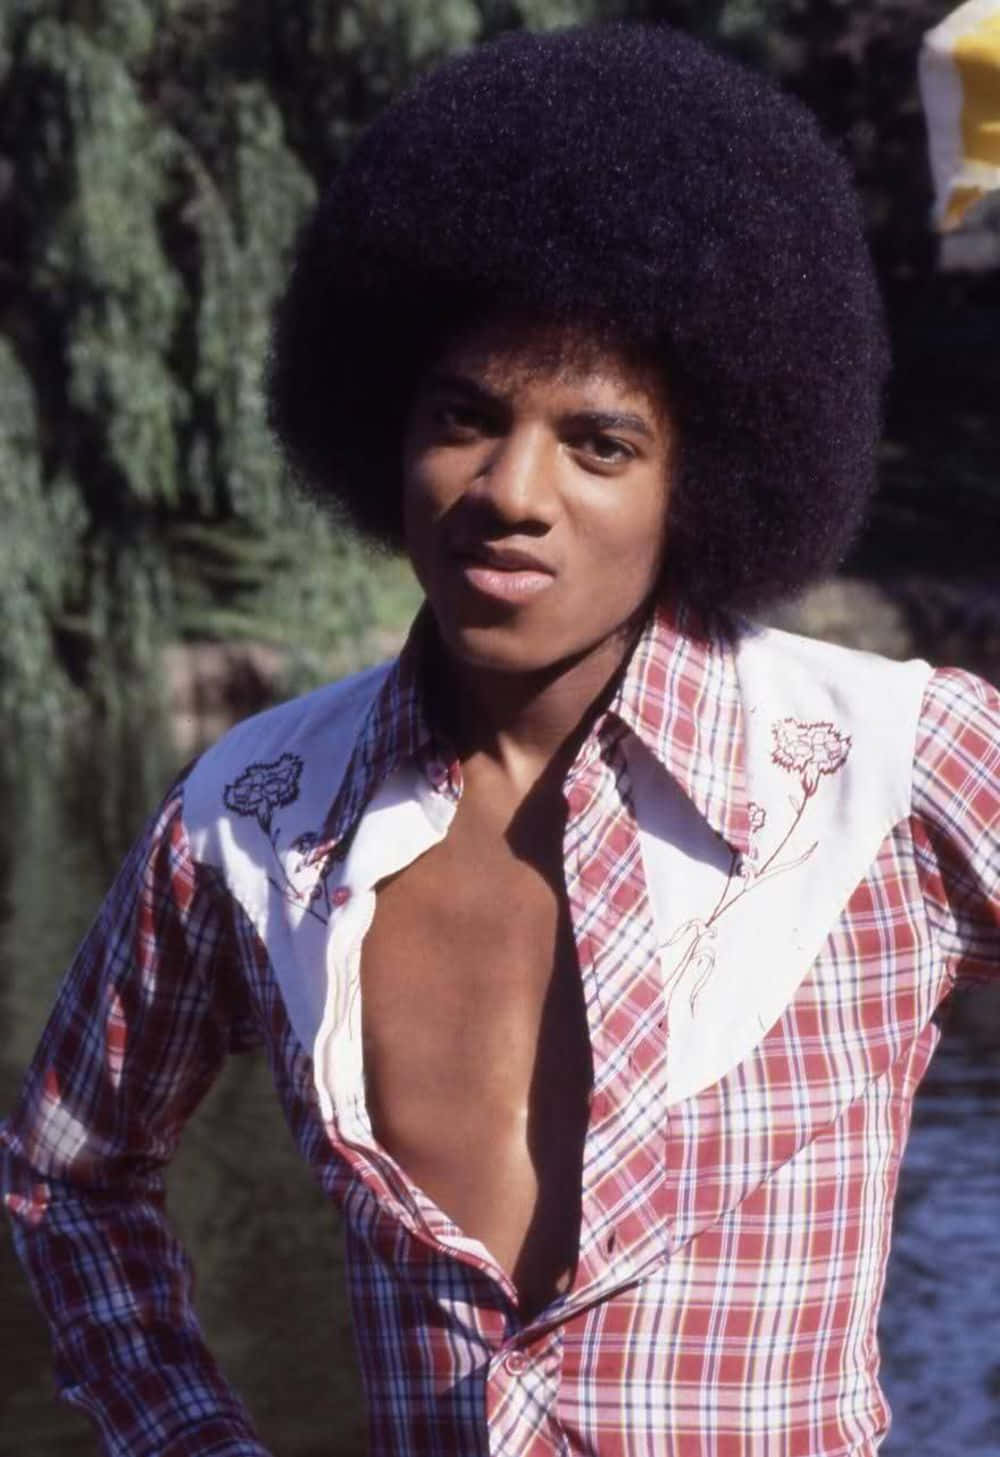 A young Michael Jackson radiates joy